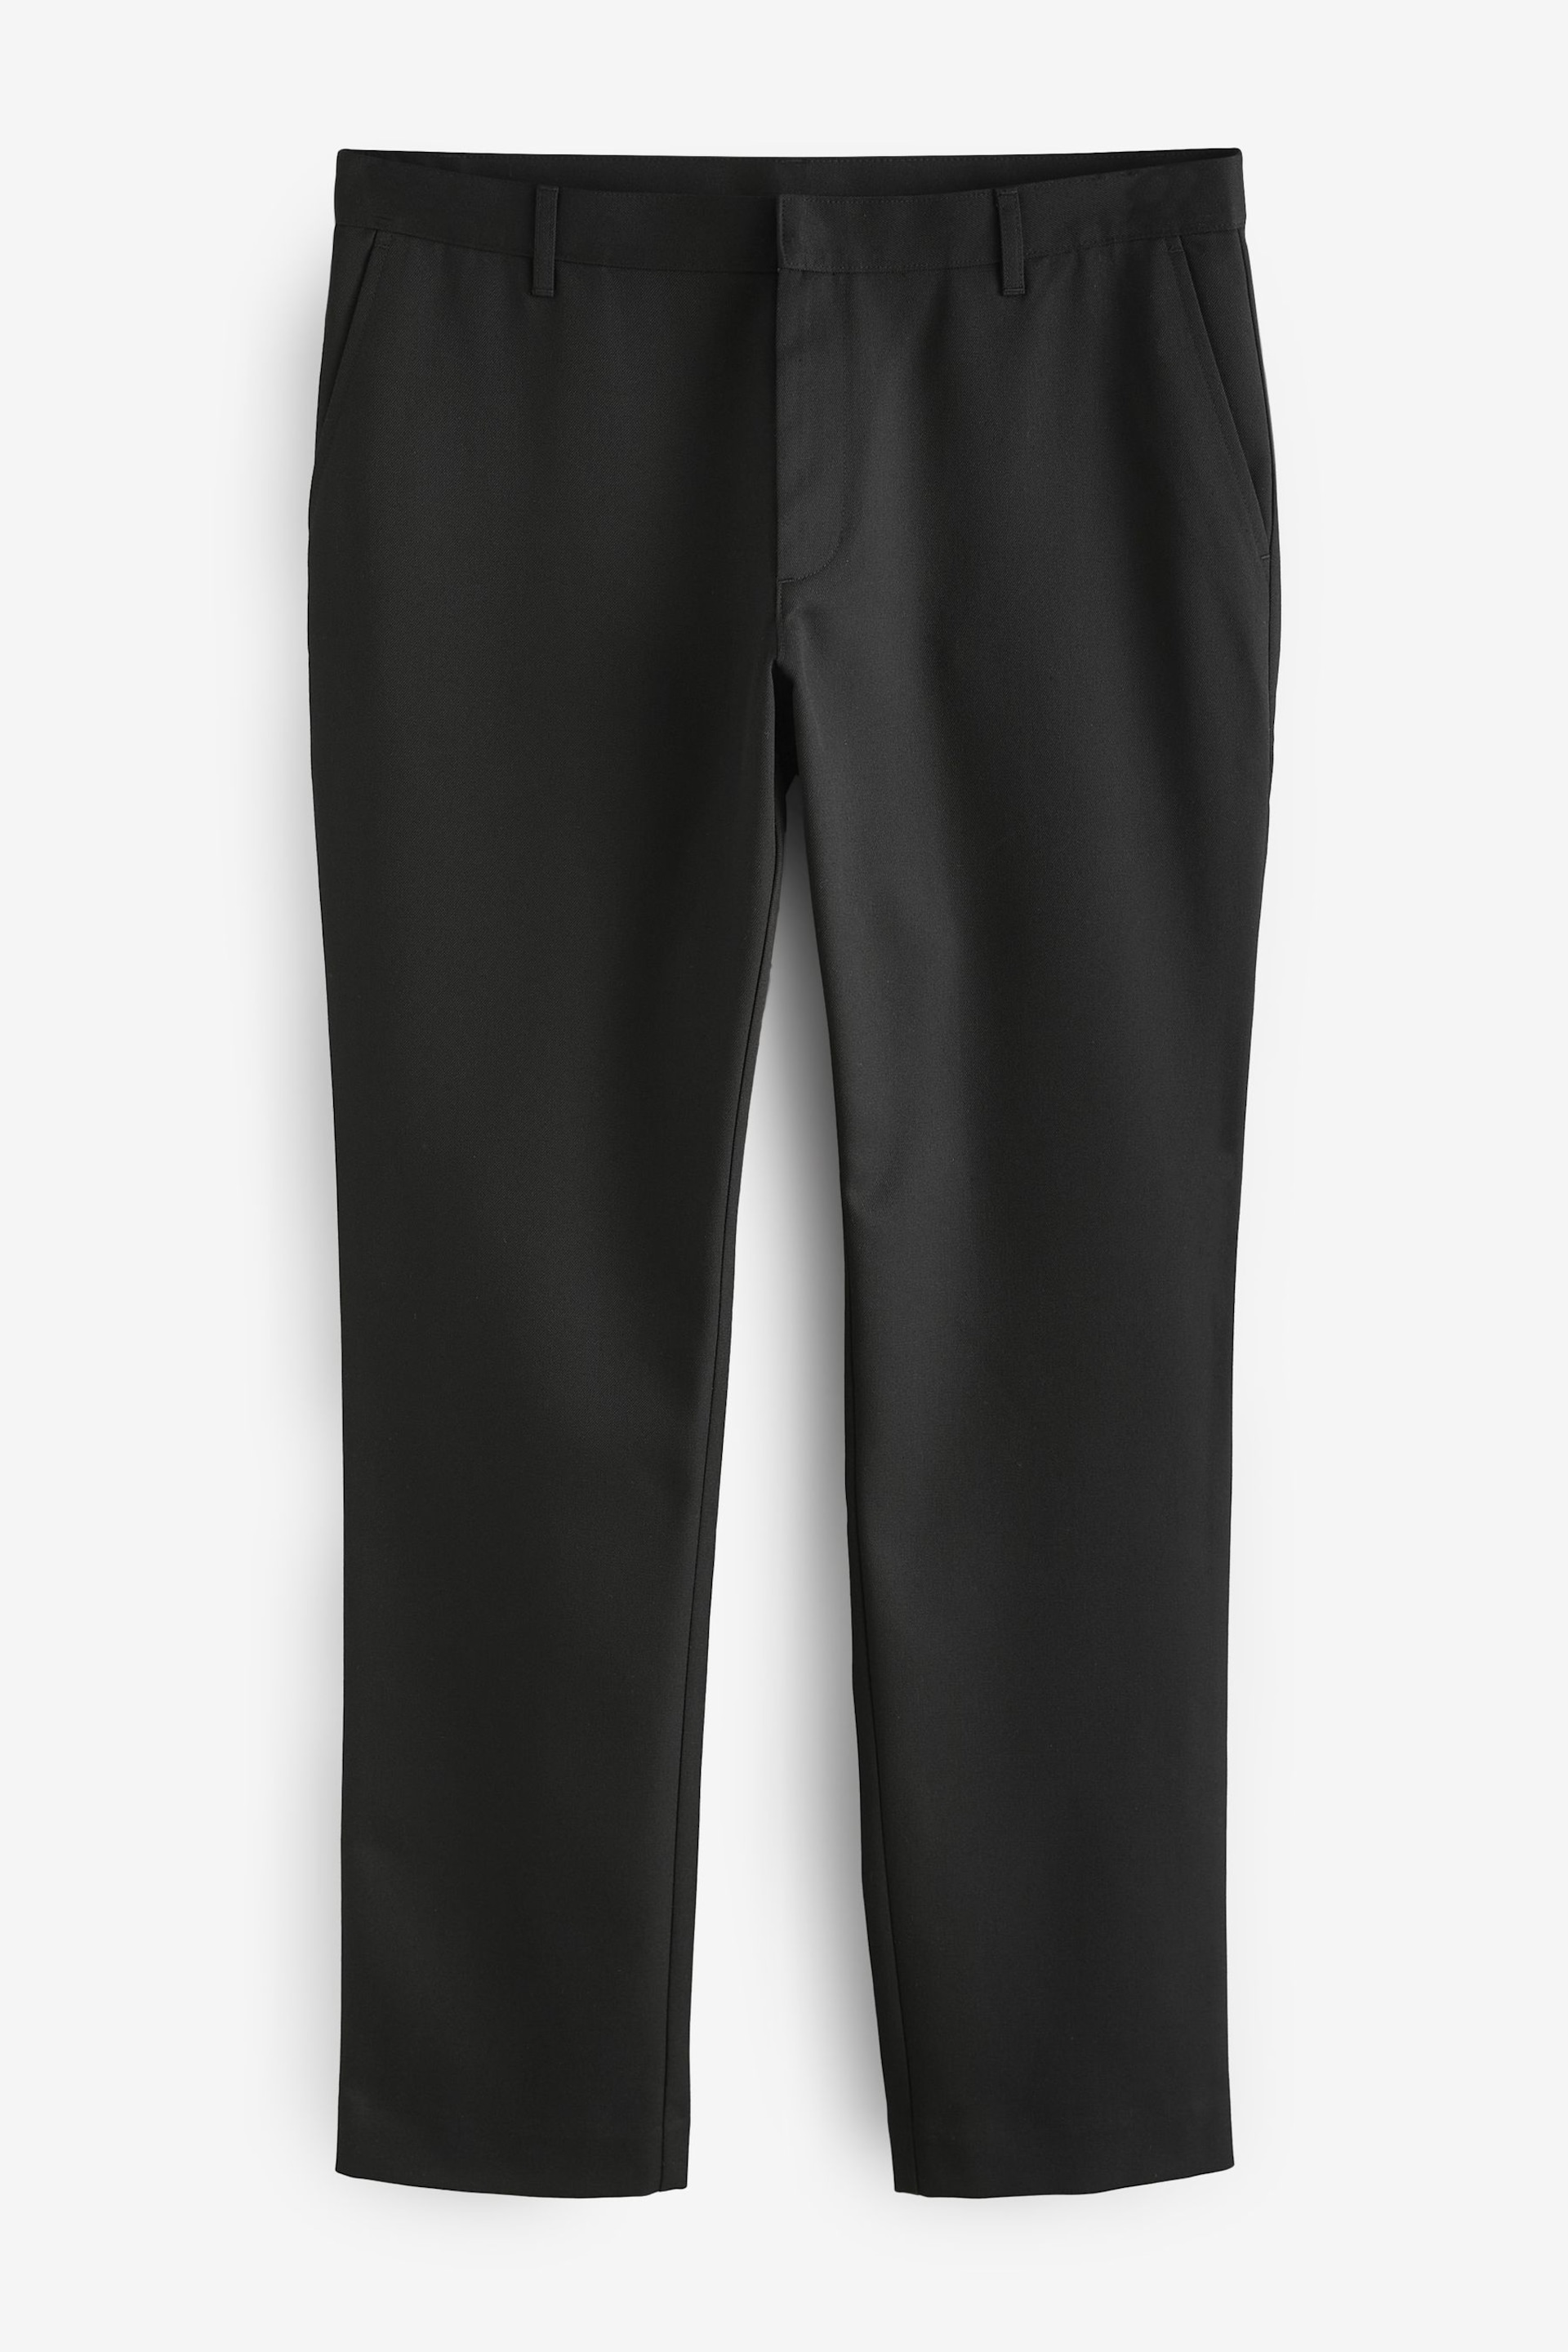 Black Slim Plain Front Smart Trousers - Image 6 of 9